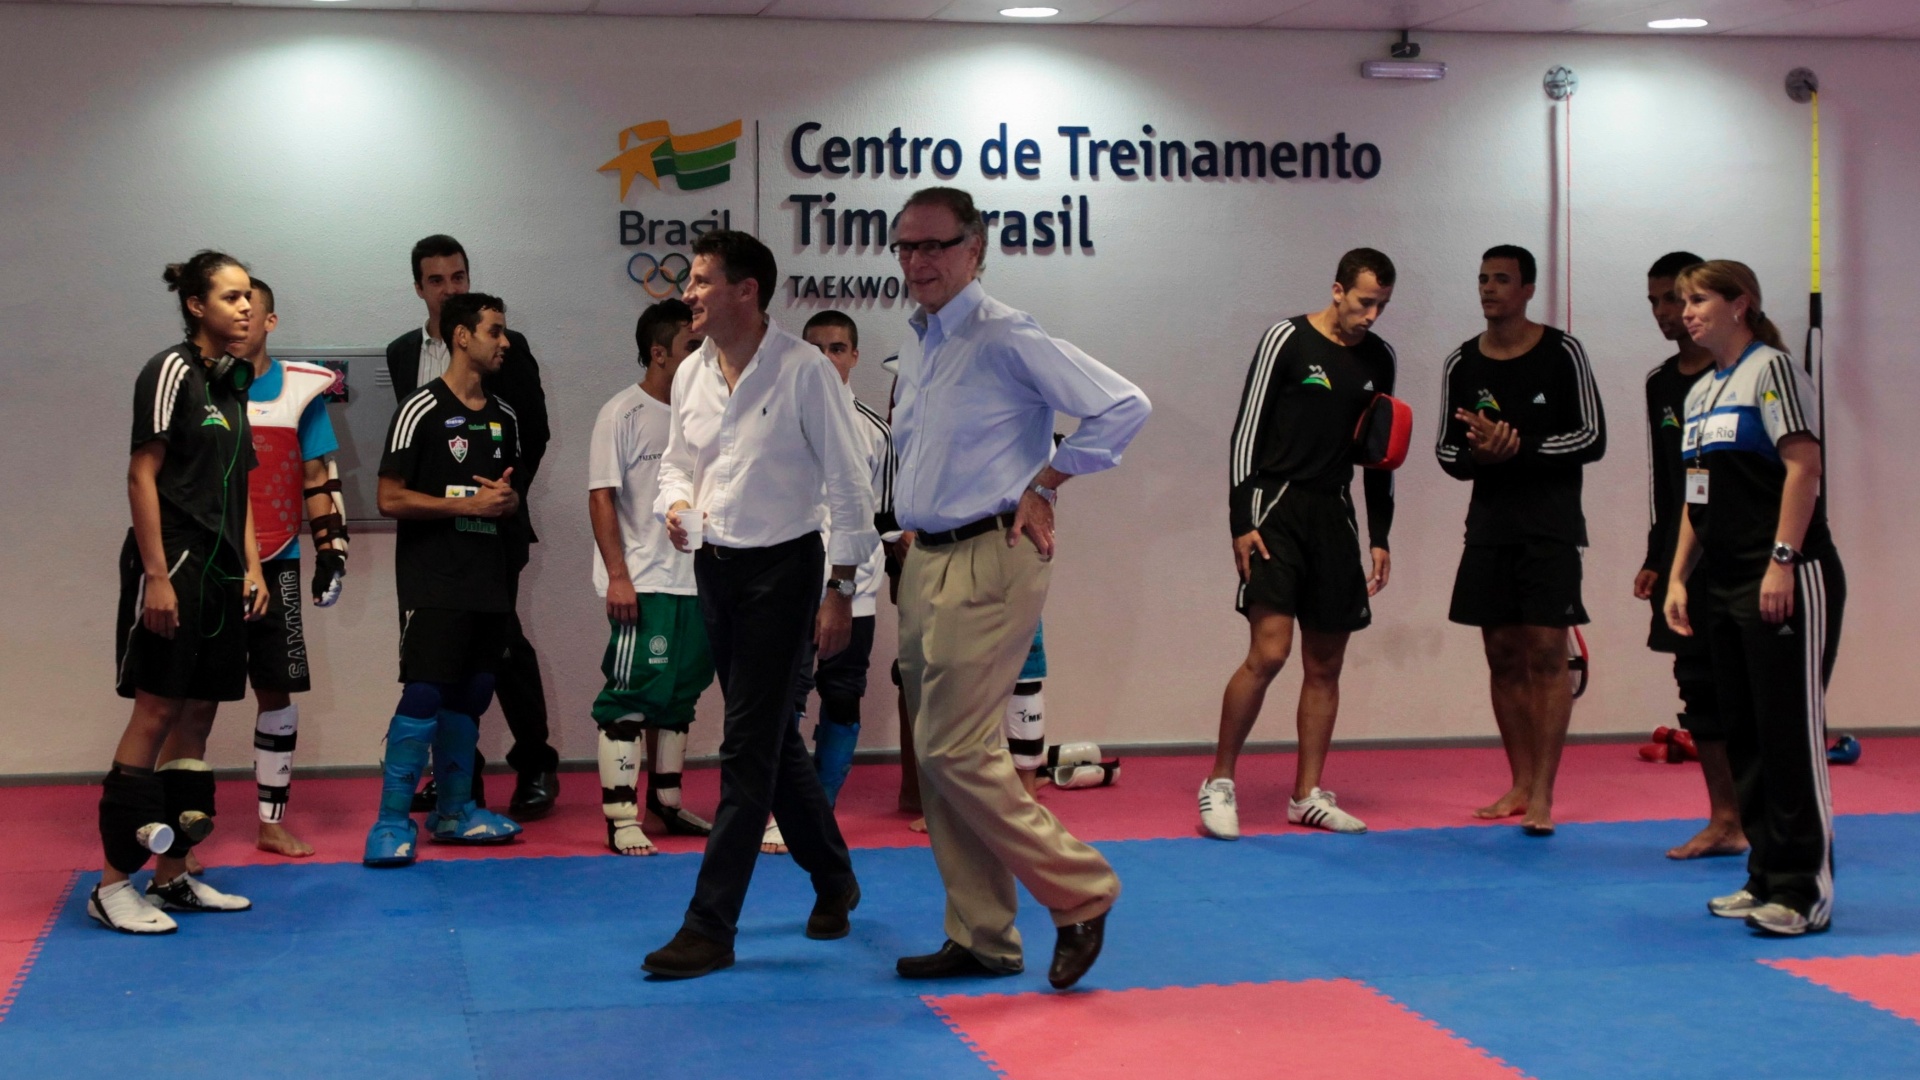 Sebastian Coe, presidente do Comitê Organizador de Londres-2012, foi recebido por Carlos Arthur Nuzman no Centro Esportivo Maria Lenk, no Rio de Janeiro